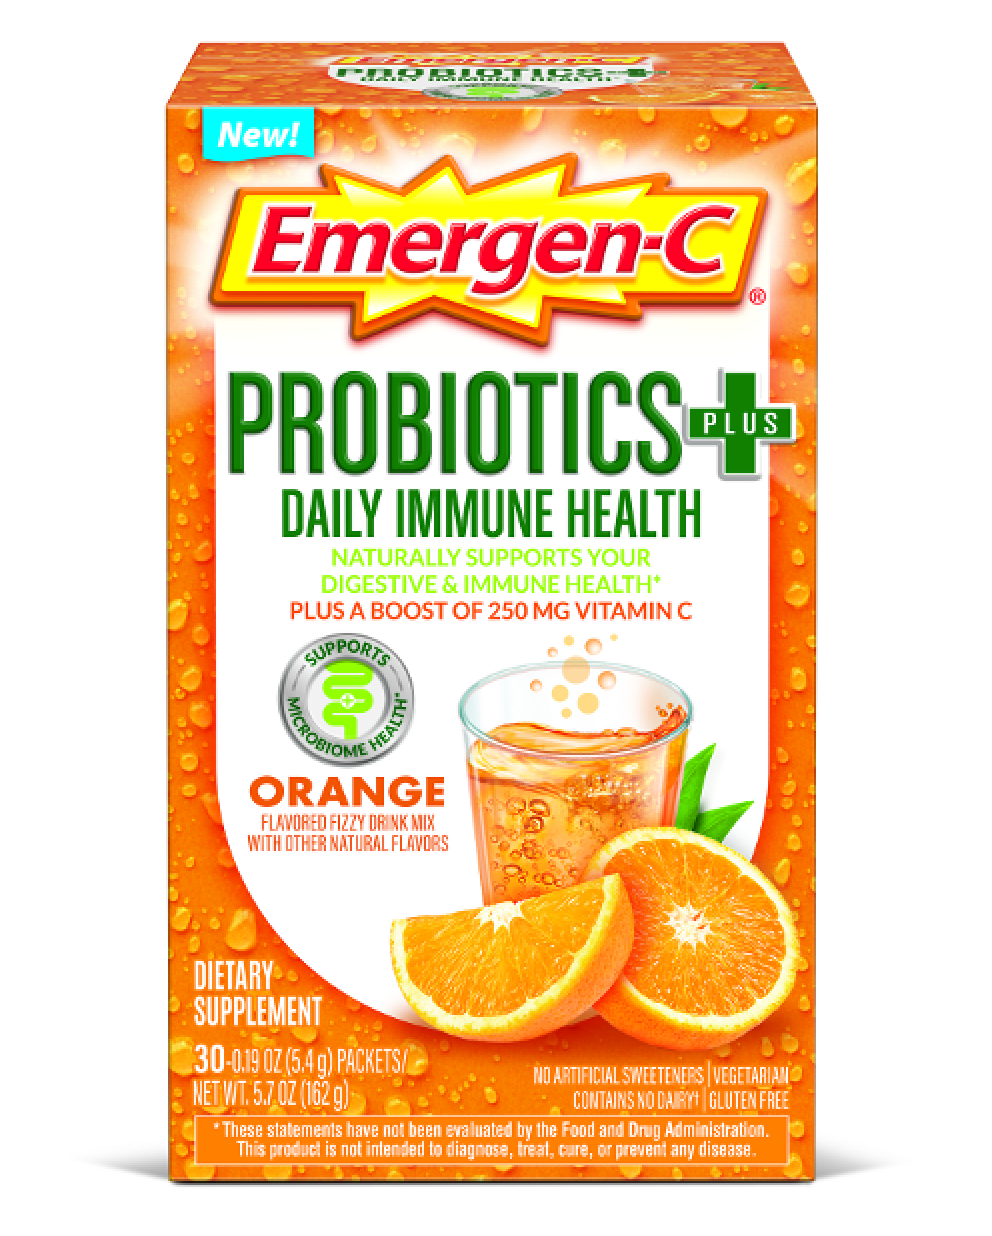 Emergen-C Brand Adding Probiotics to Product Line